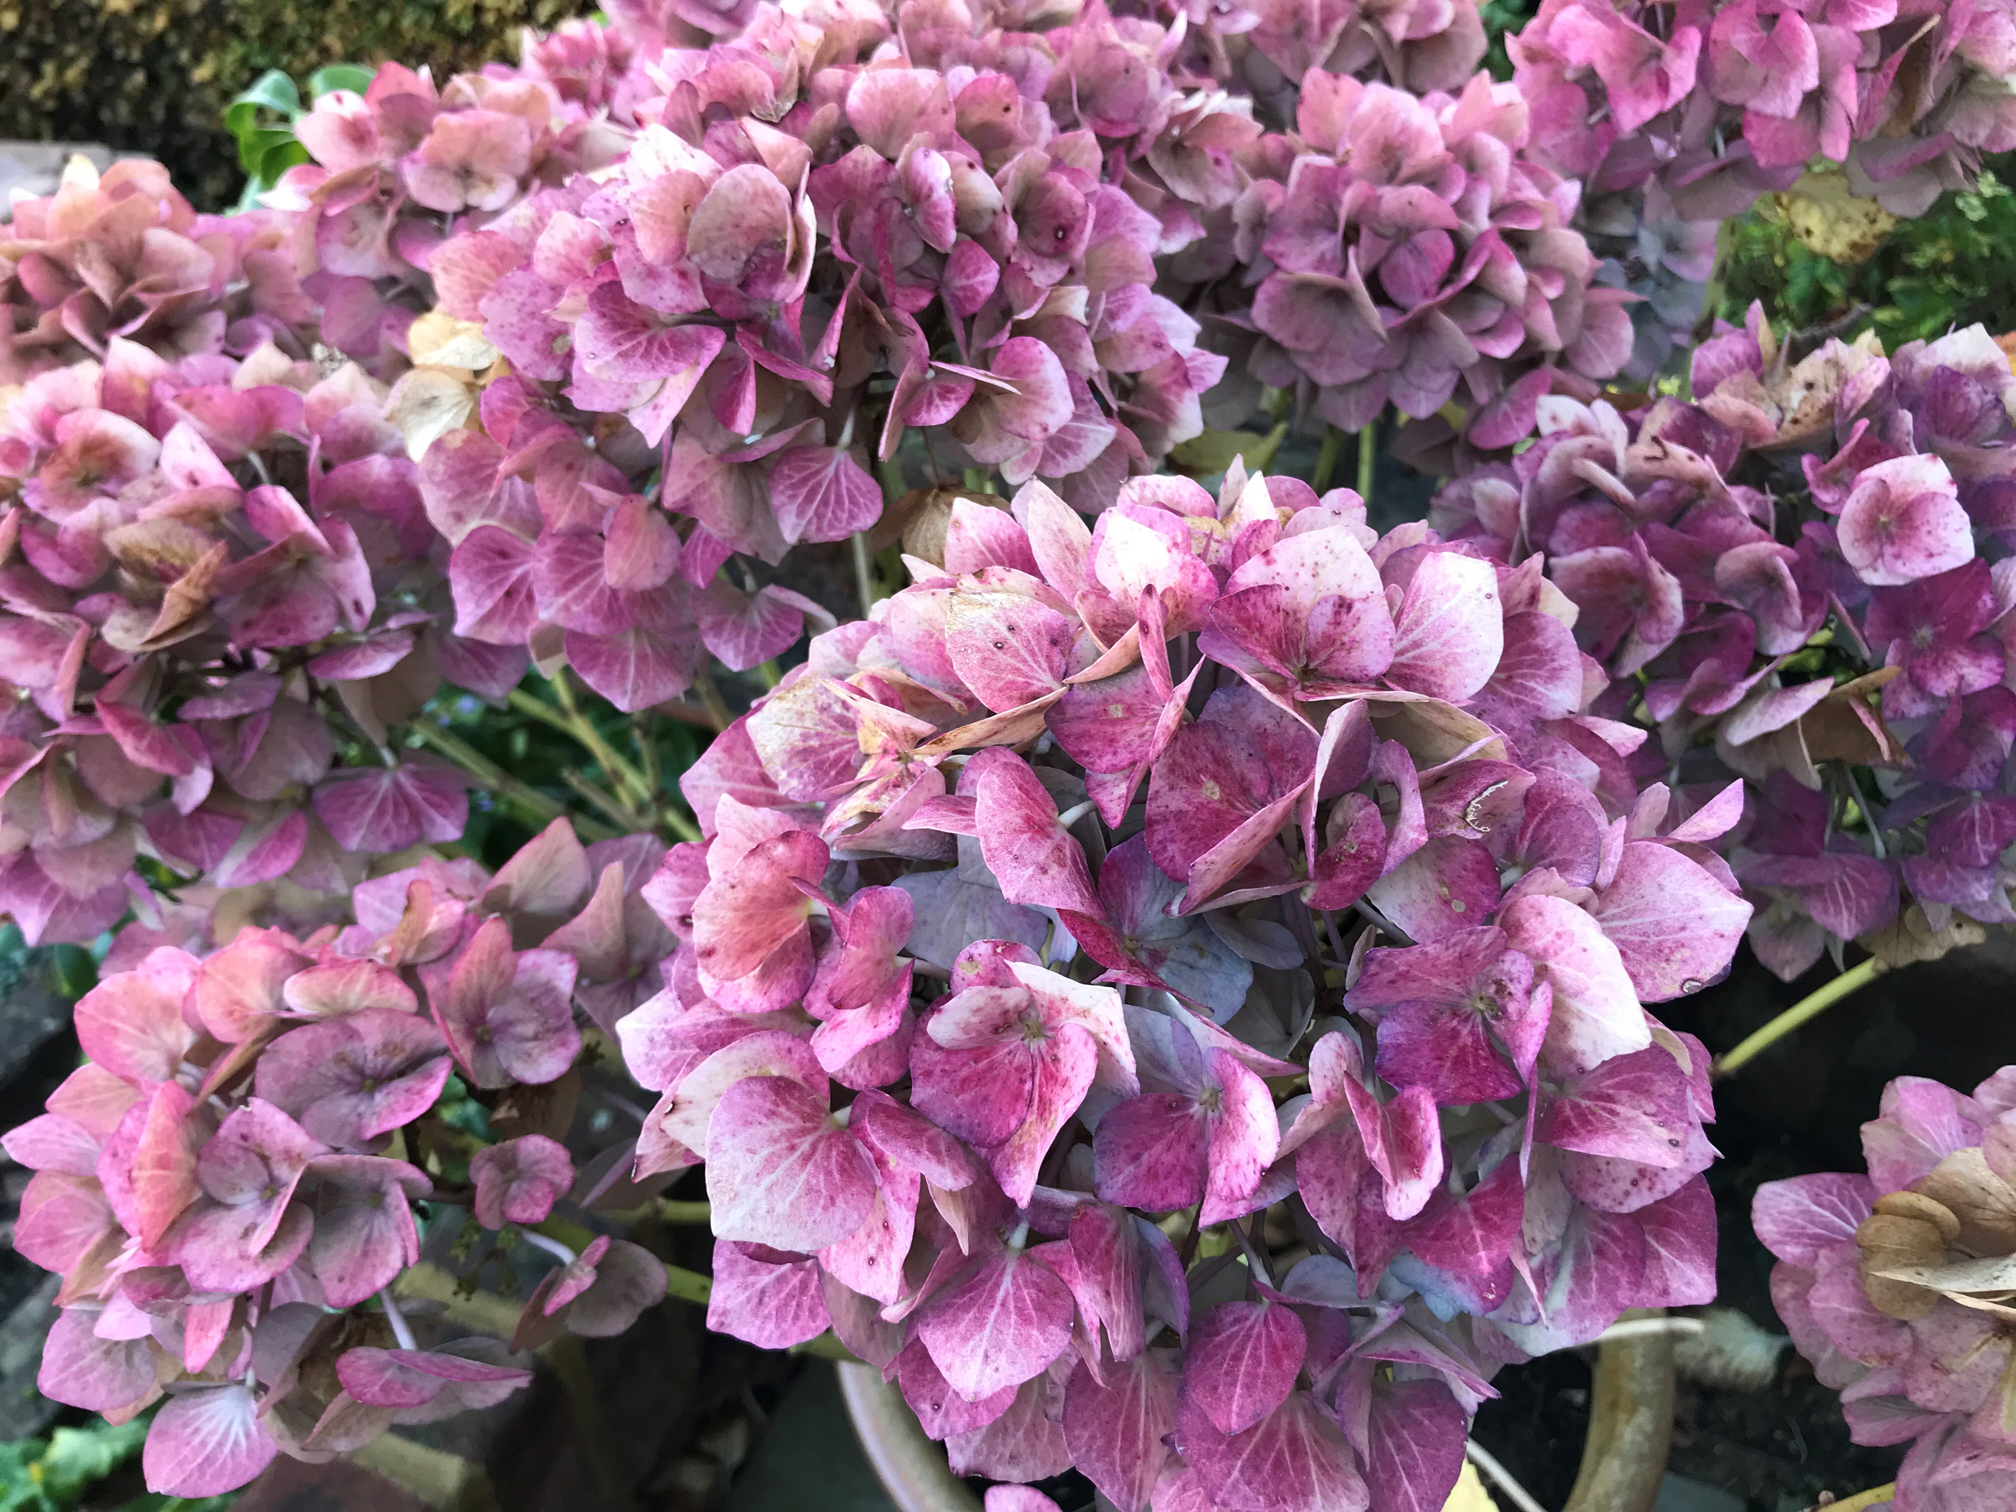 Hydrangea flowerheads. (Hannah Stephenson/PA)